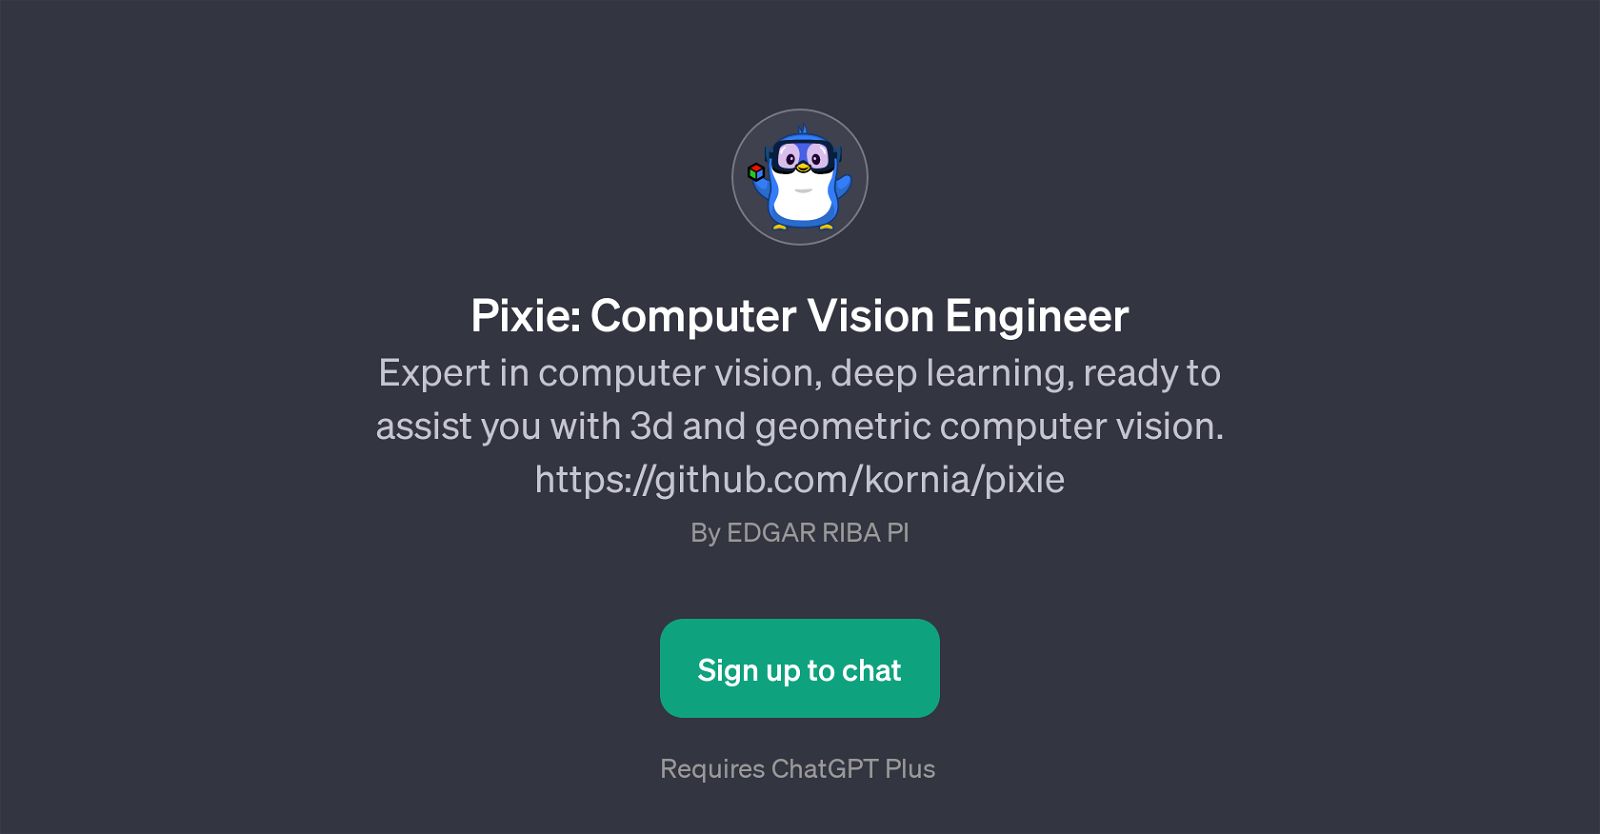 Pixie: Computer Vision Engineer website